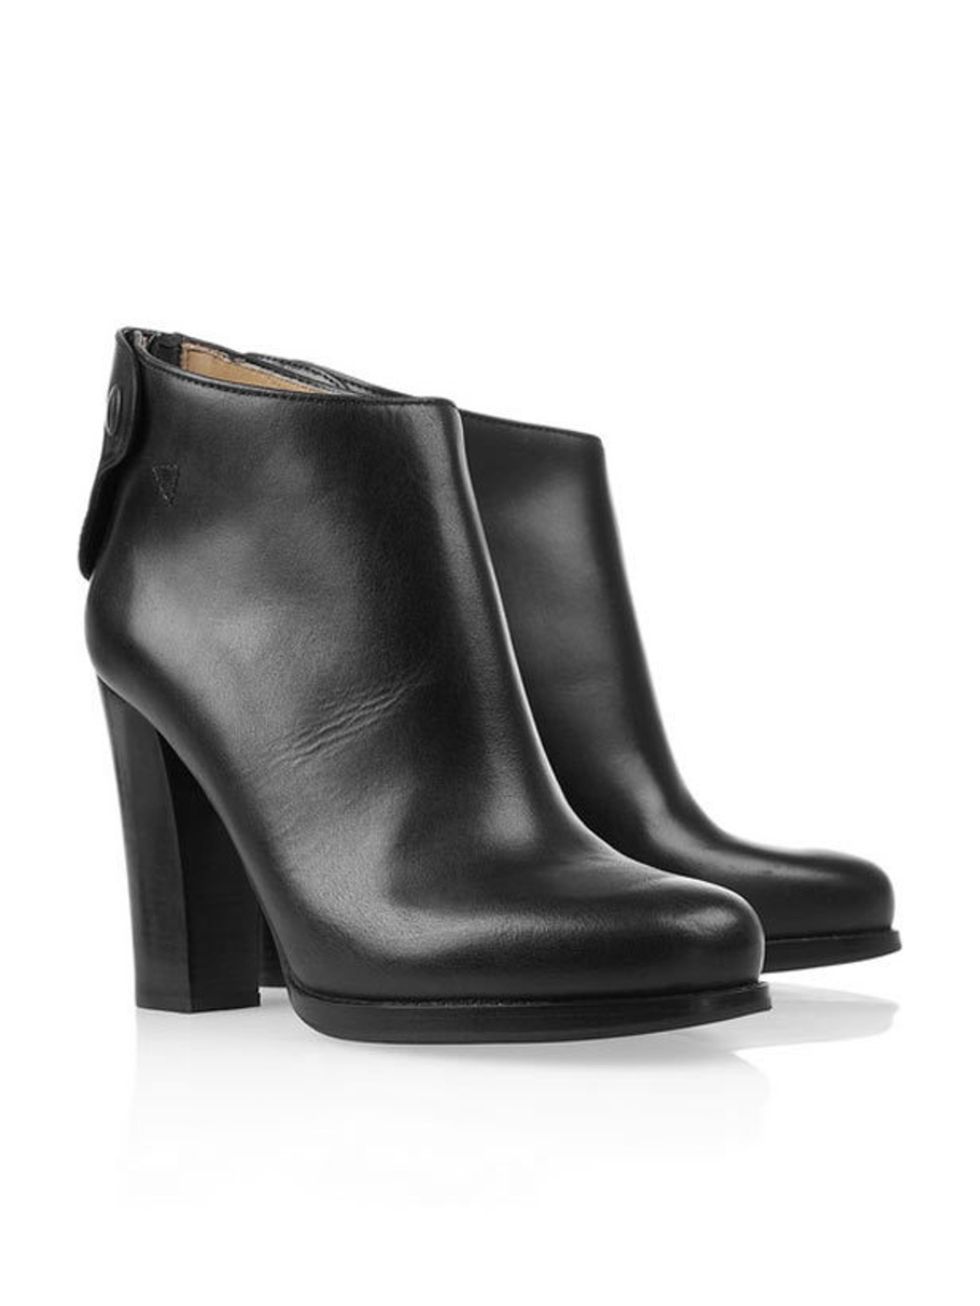 <p>Jil Sander ankle boots, £445, at <a href="http://www.net-a-porter.com/product/162533">Net-a-Porter</a></p>